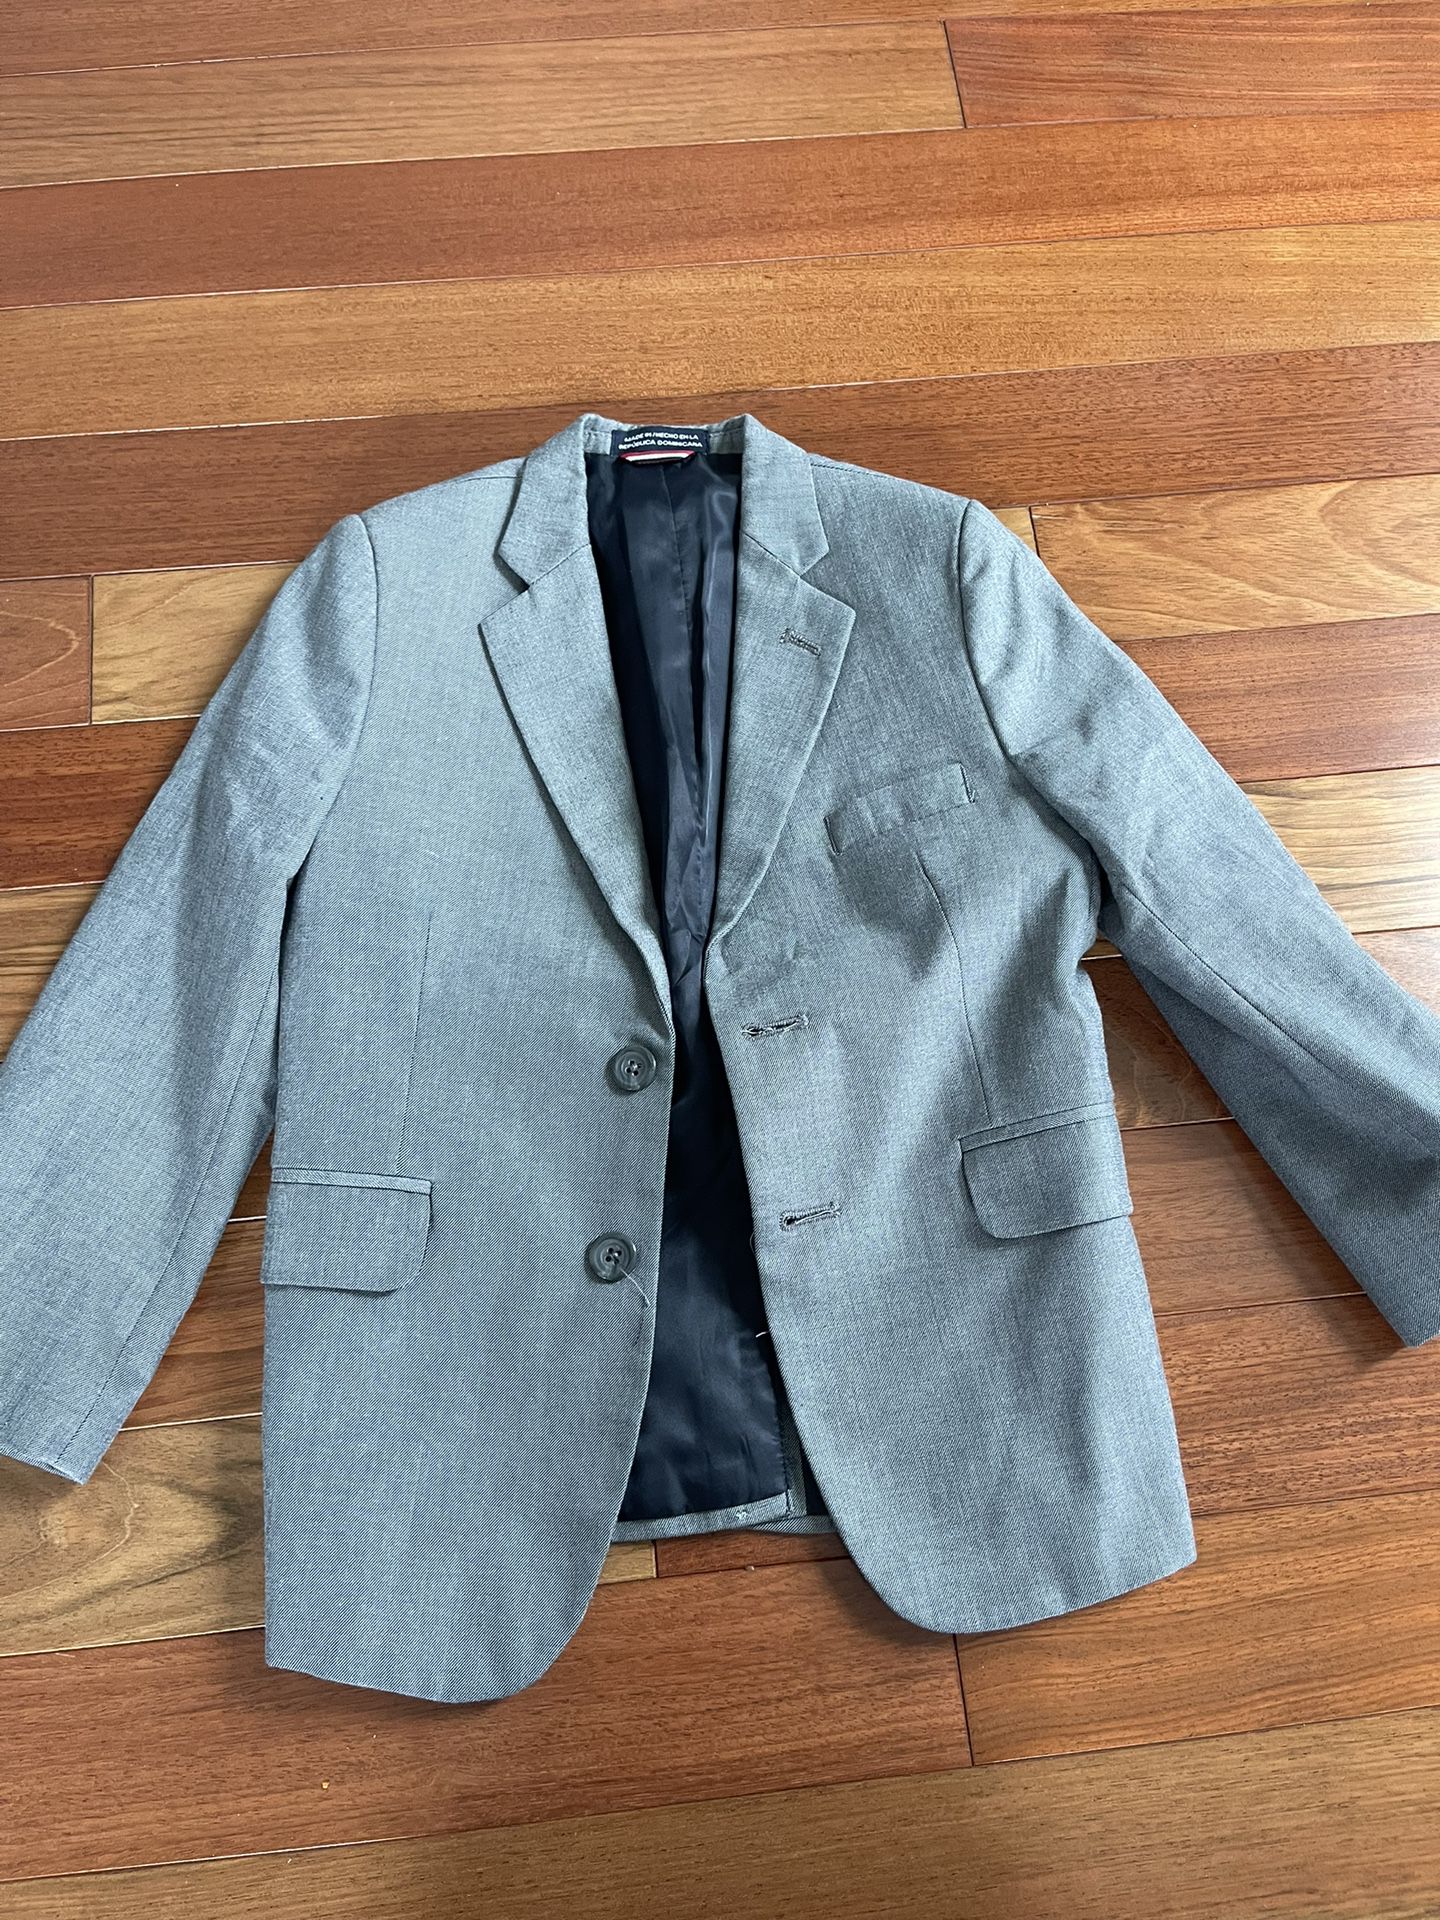 Gray Boys Suit Jacket/Blazer